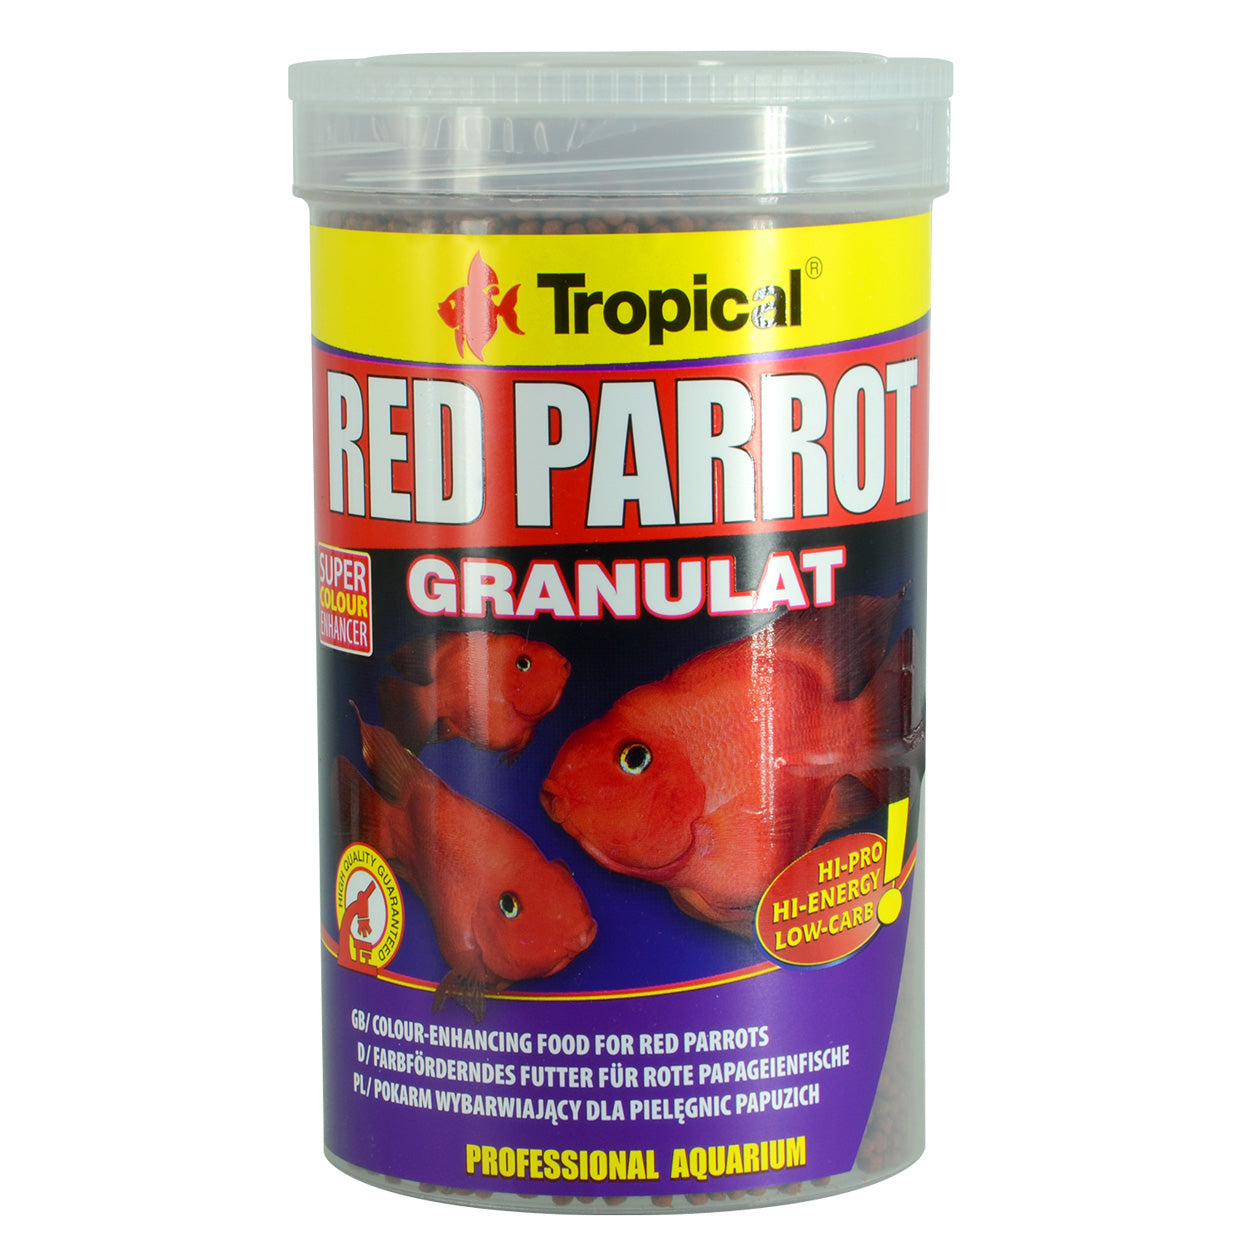 Red Parrot Granulat